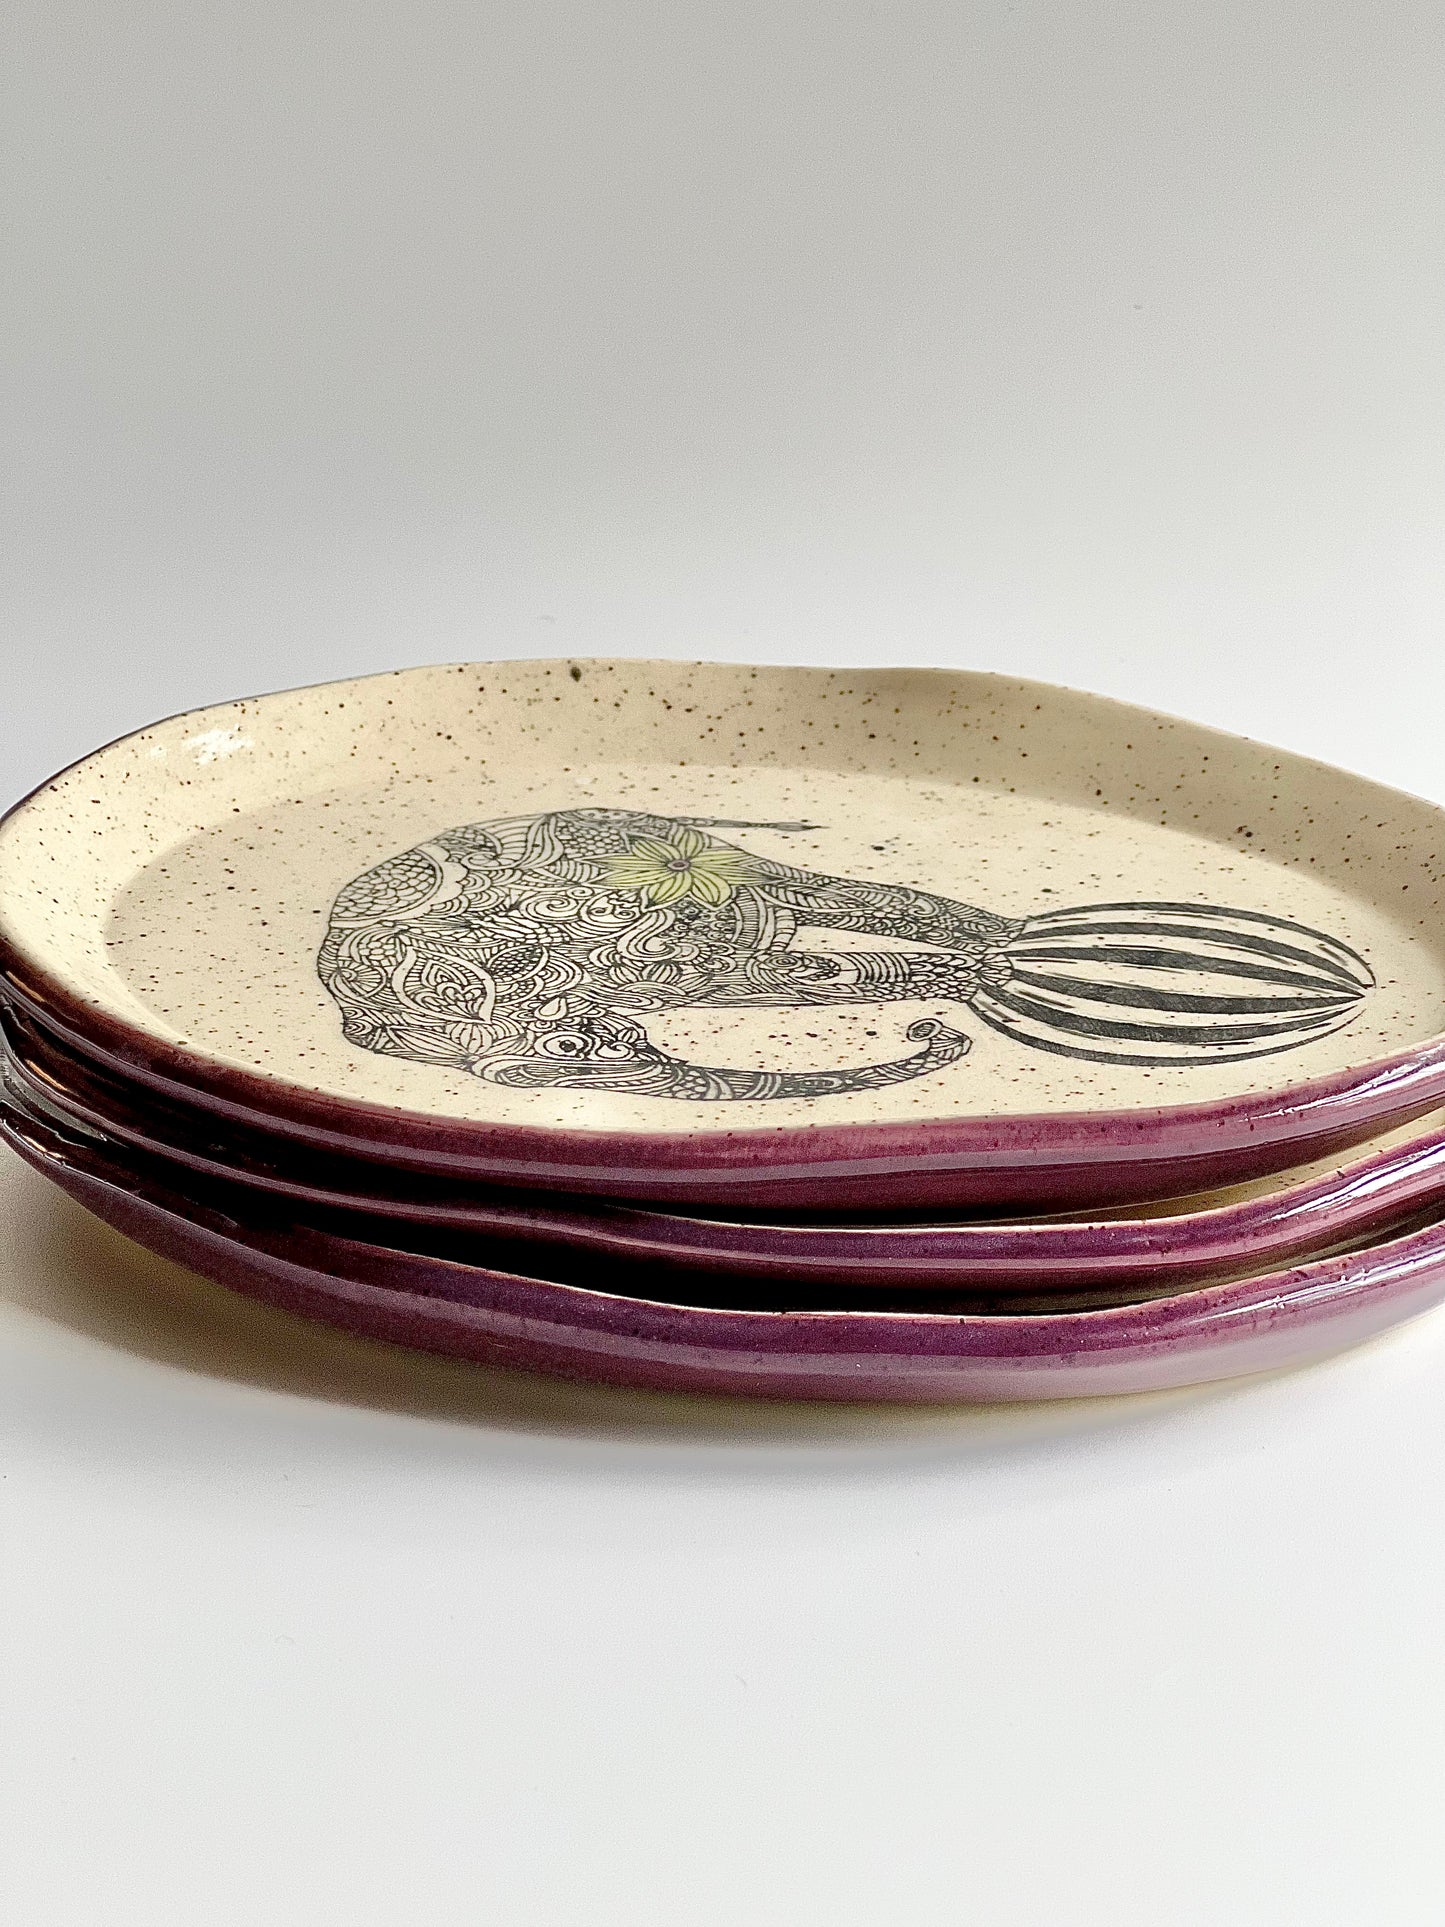 Ceramic Circus Elephant Plate, Tray, Dish (Mulberry Trim)